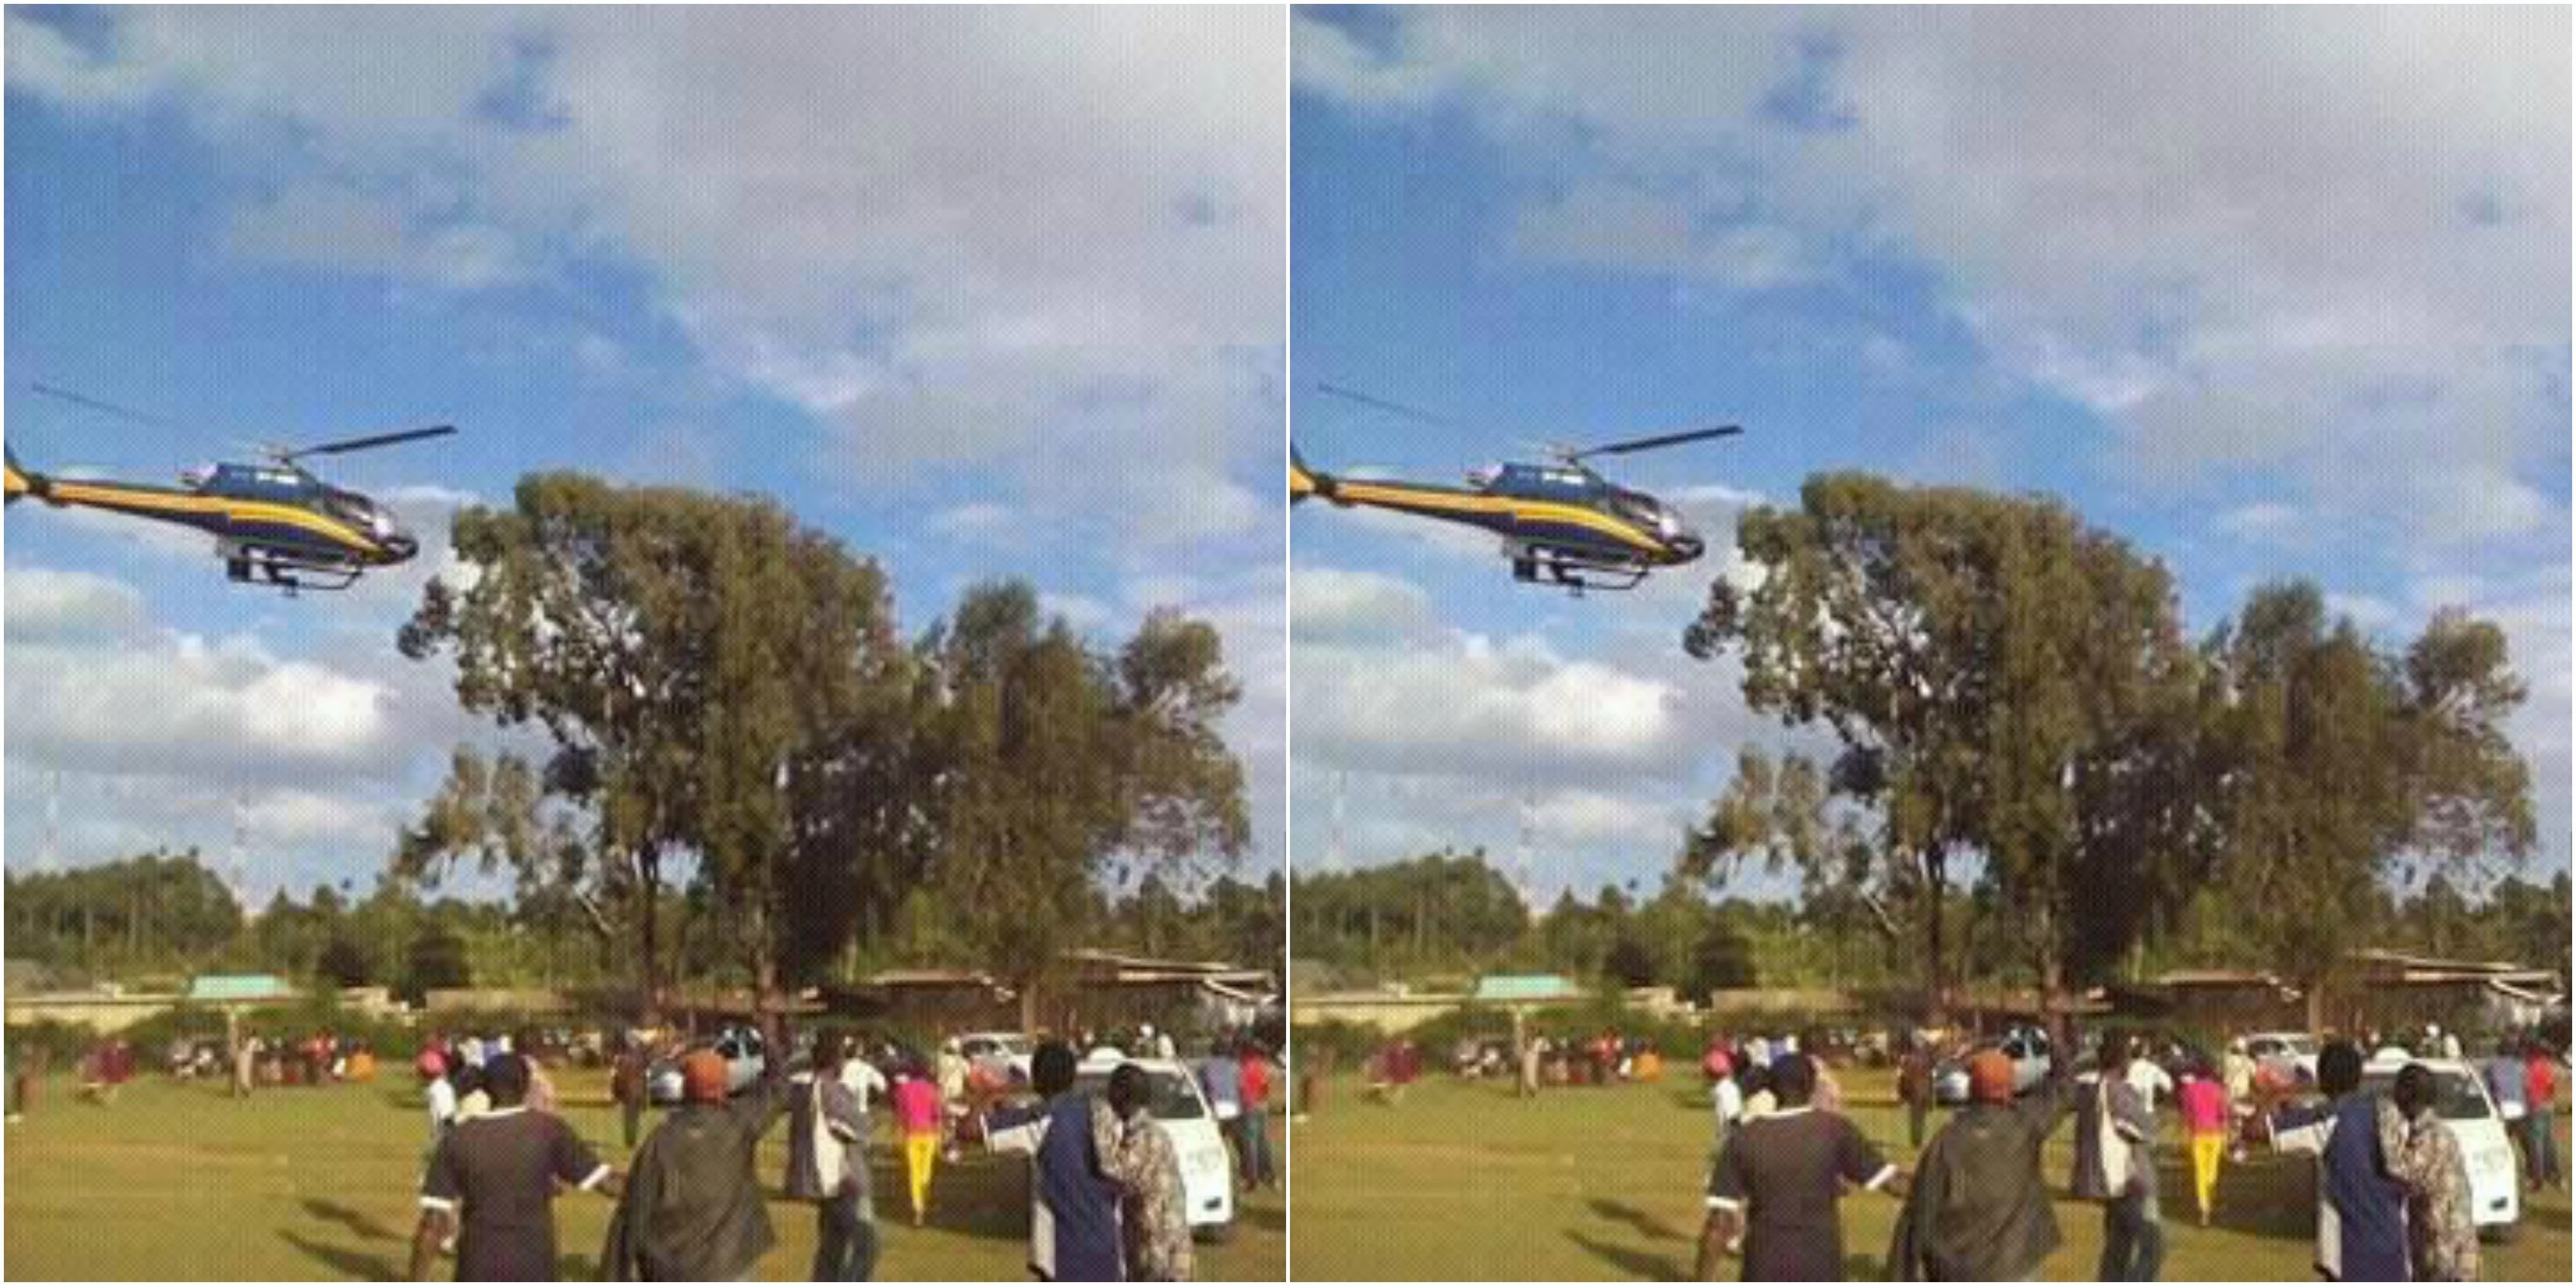 Man hangs on chopper carrying Raila Odinga